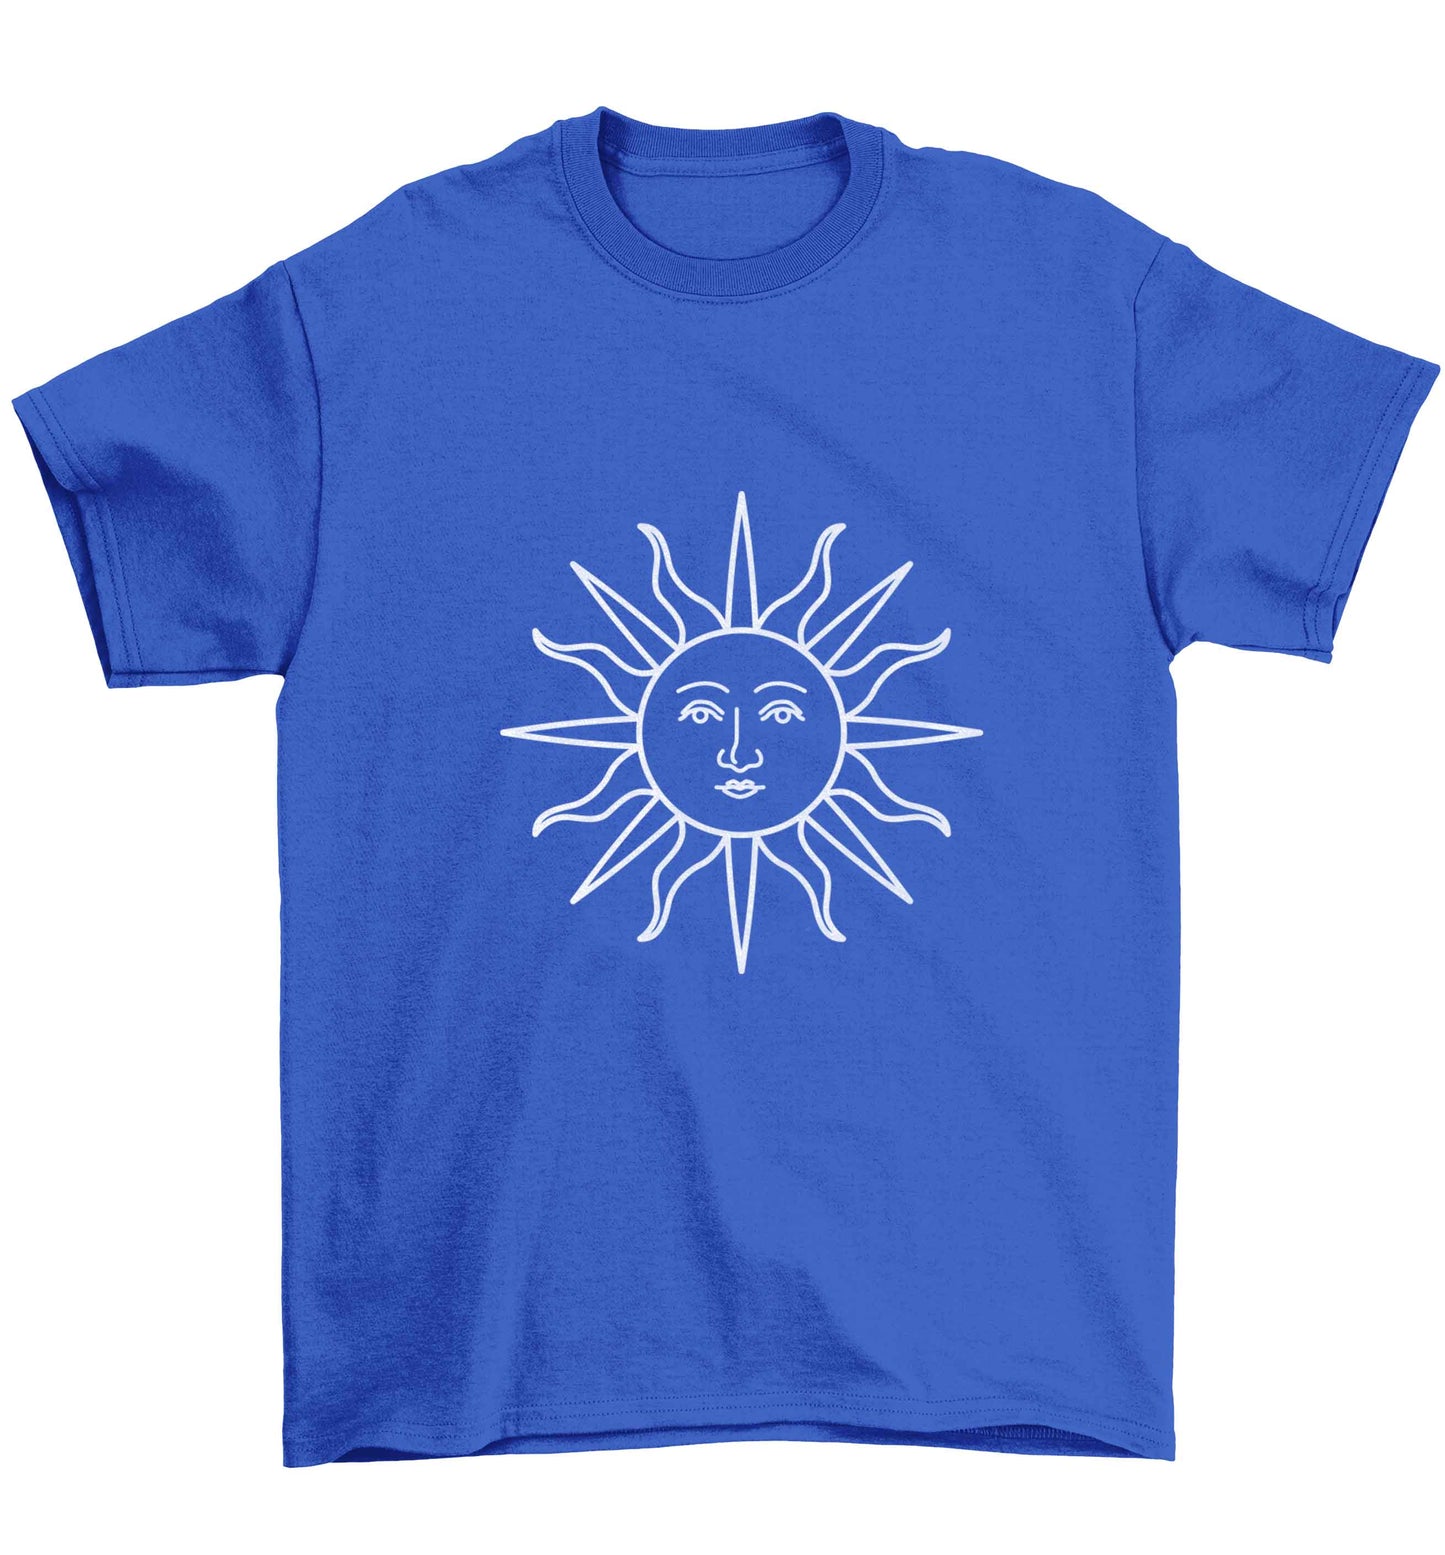 Sun face illustration Children's blue Tshirt 12-13 Years